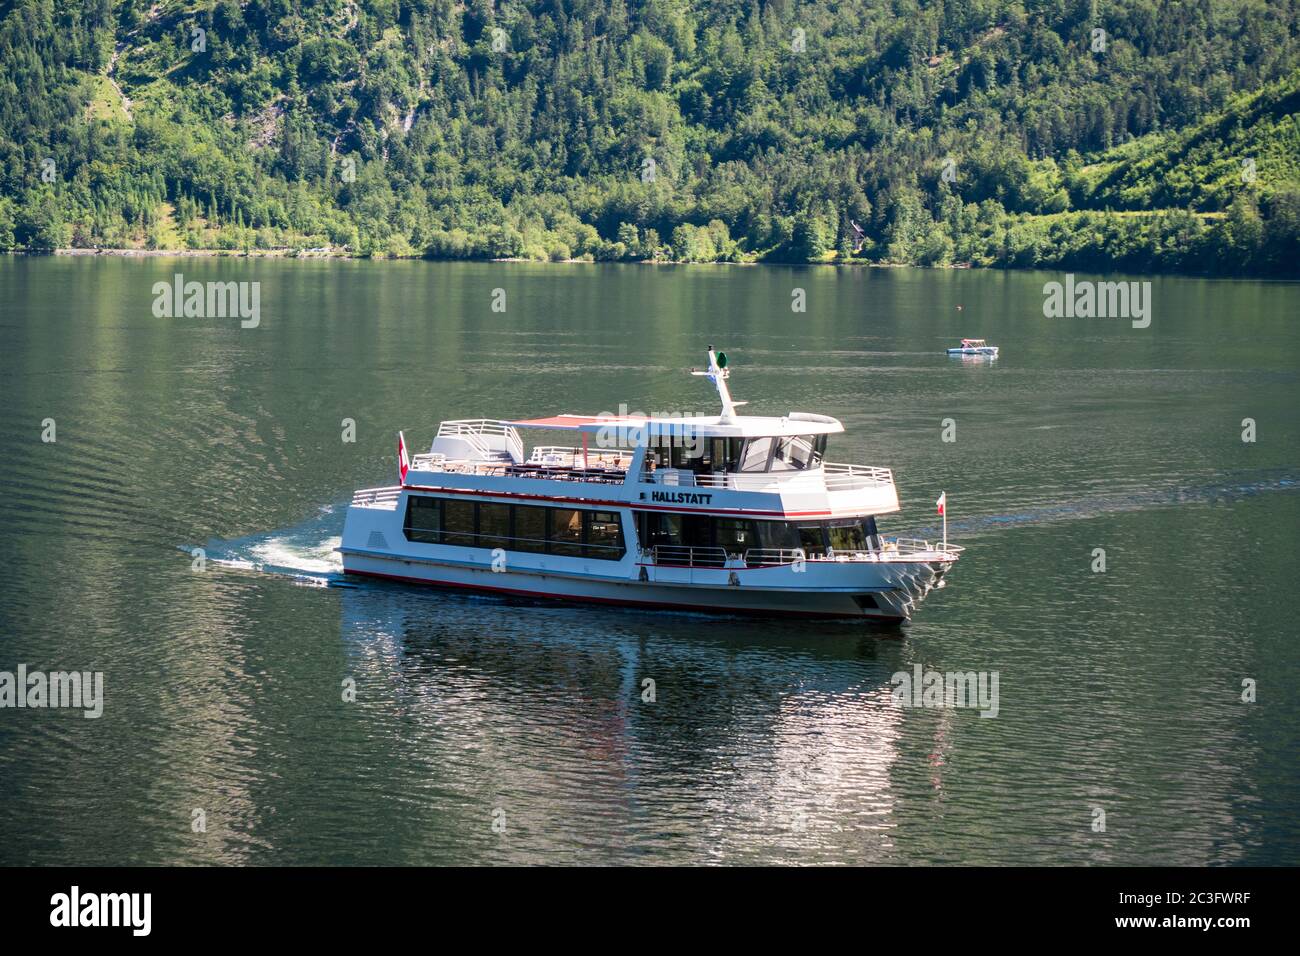 Hallstatt, Austria - June 12 2020: Excursion Cruise Ship Hallstatt Cruising on the Lake Hallstatter See in Summer in the Alps of Austria Stock Photo